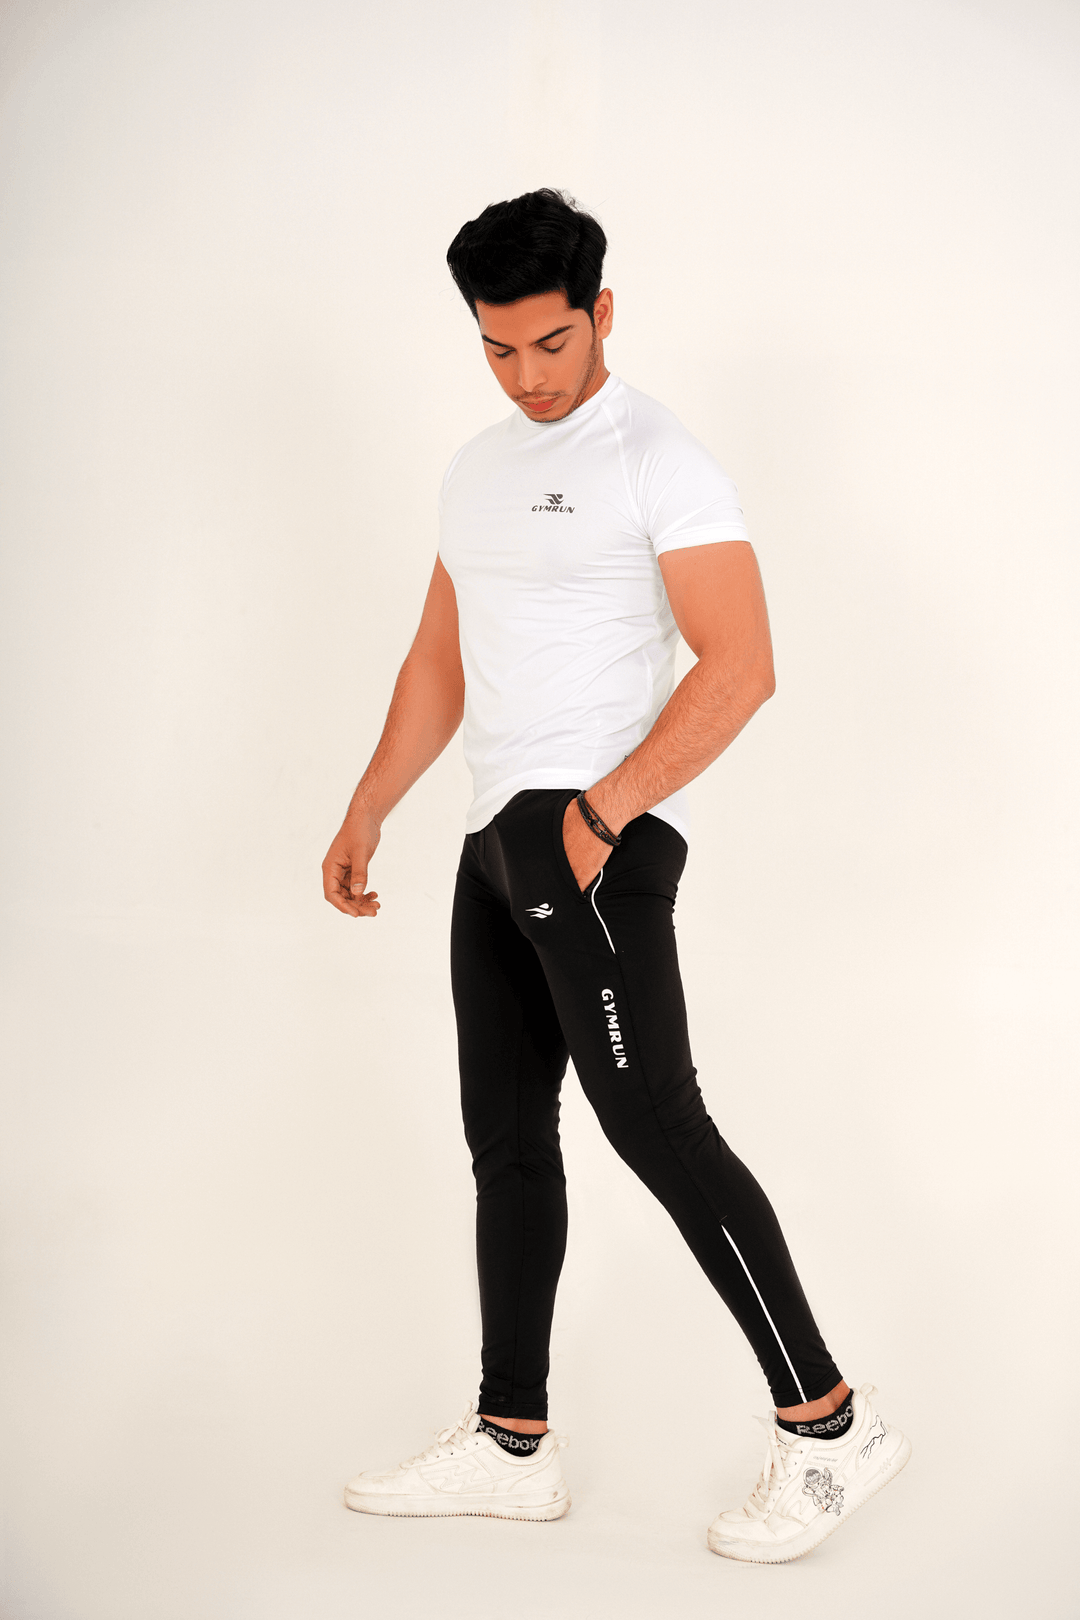 Pro-Fit Men's Performance Trousers-Black White - GYMRUN Activewear